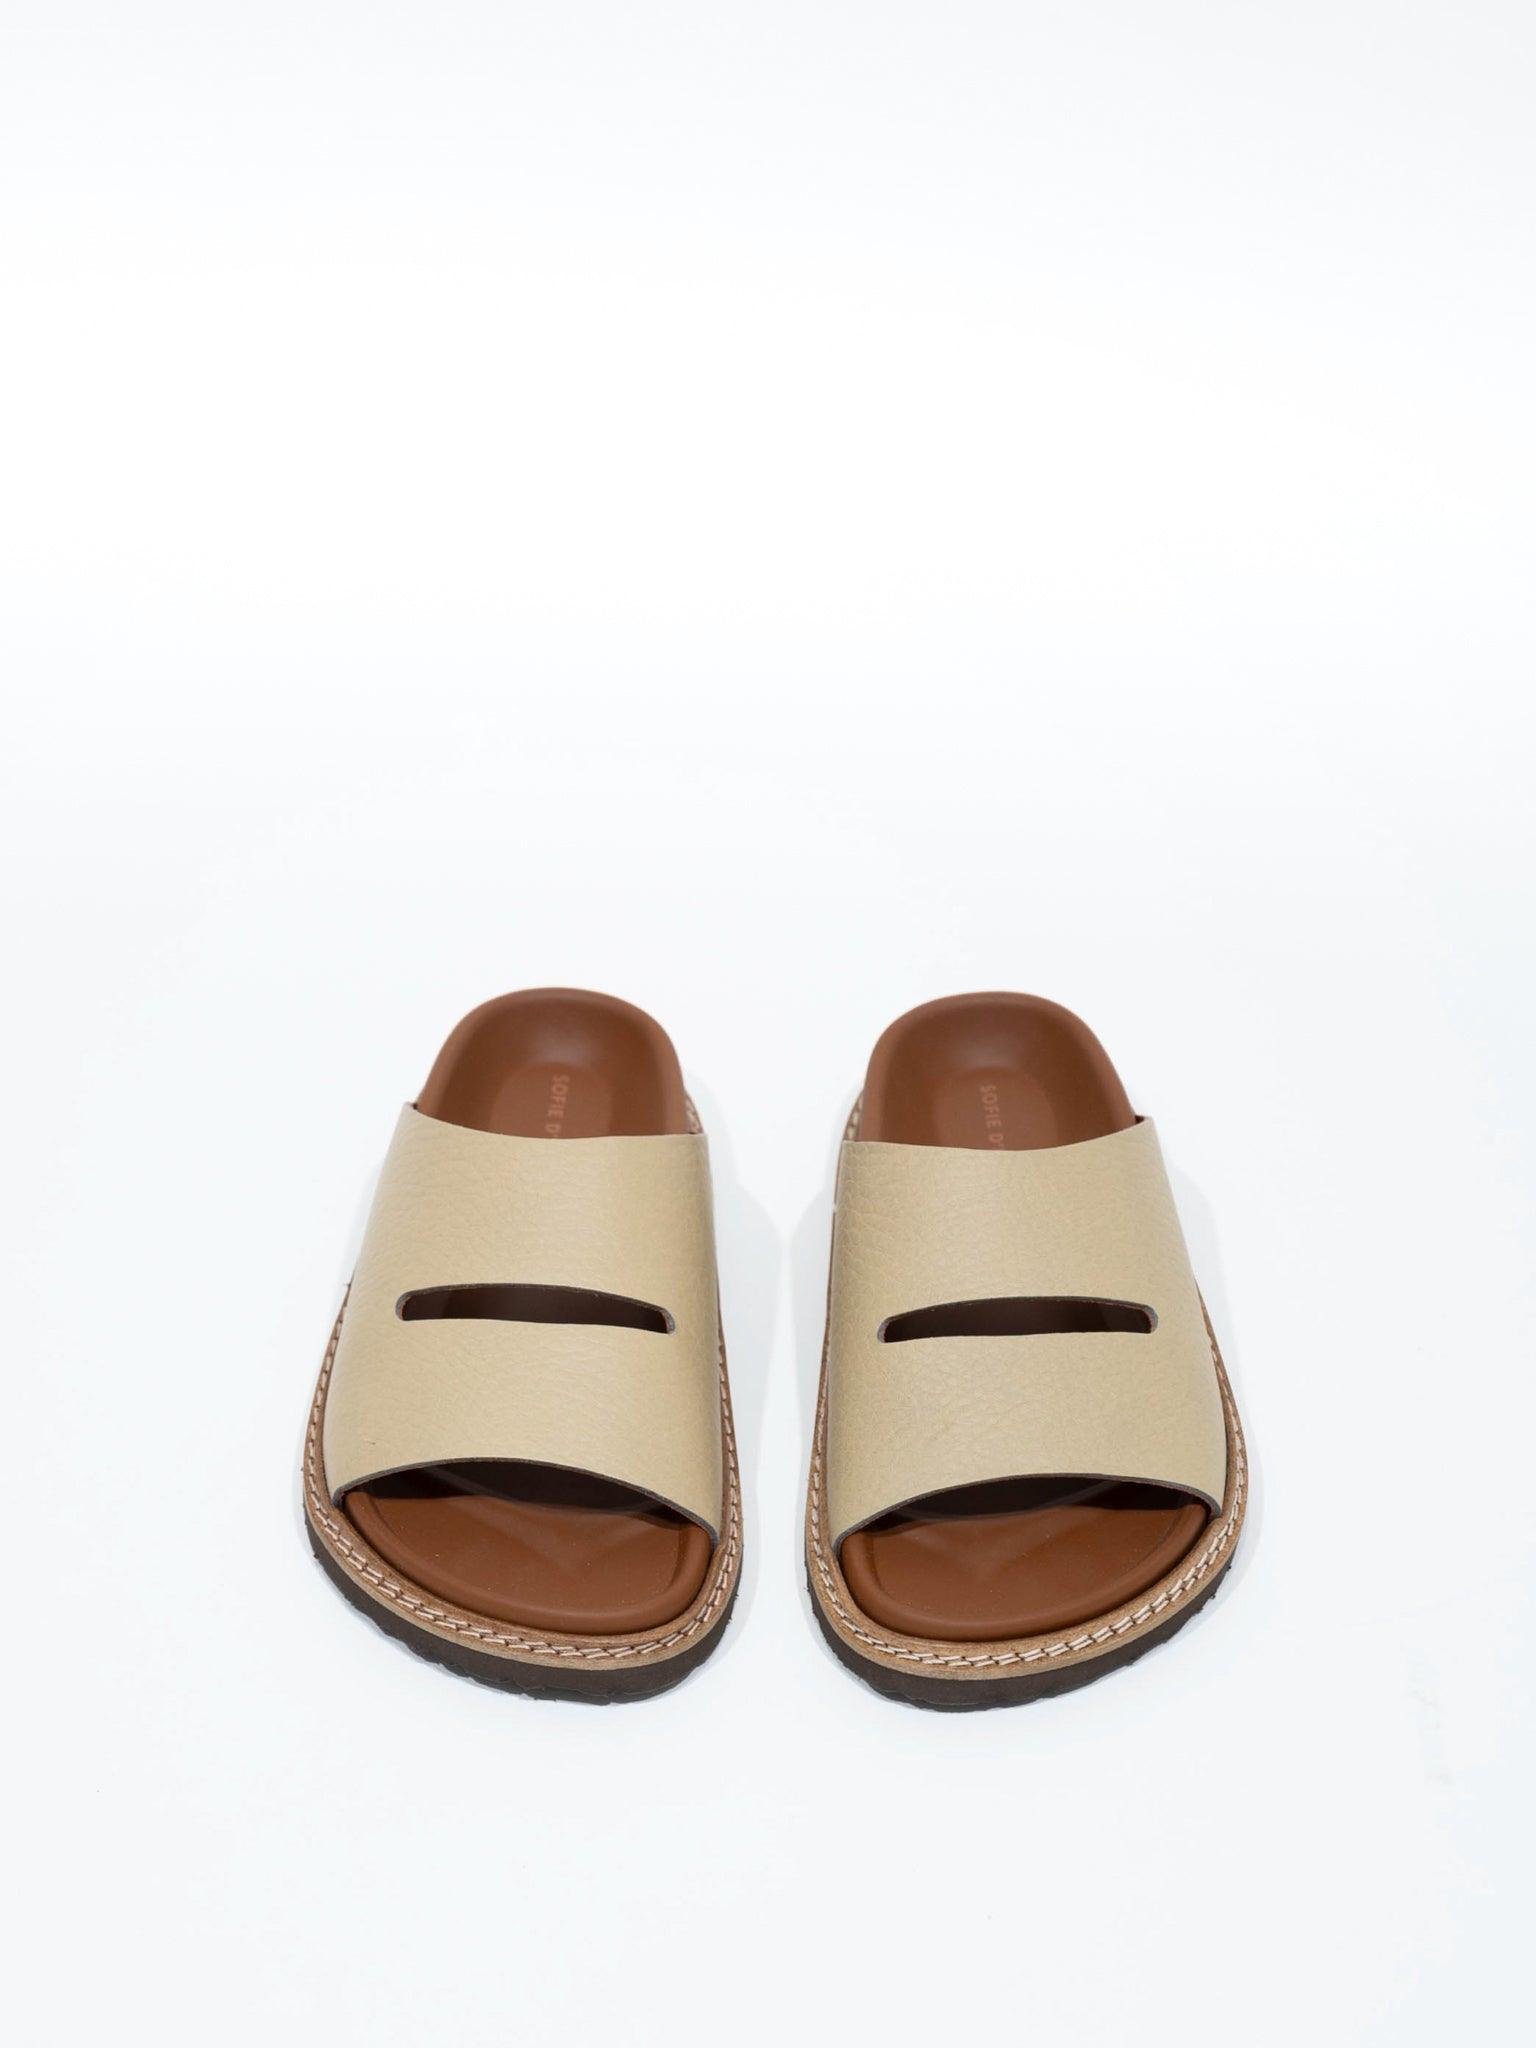 Namu Shop - Sofie D'Hoore Fabia Sandals - Stone